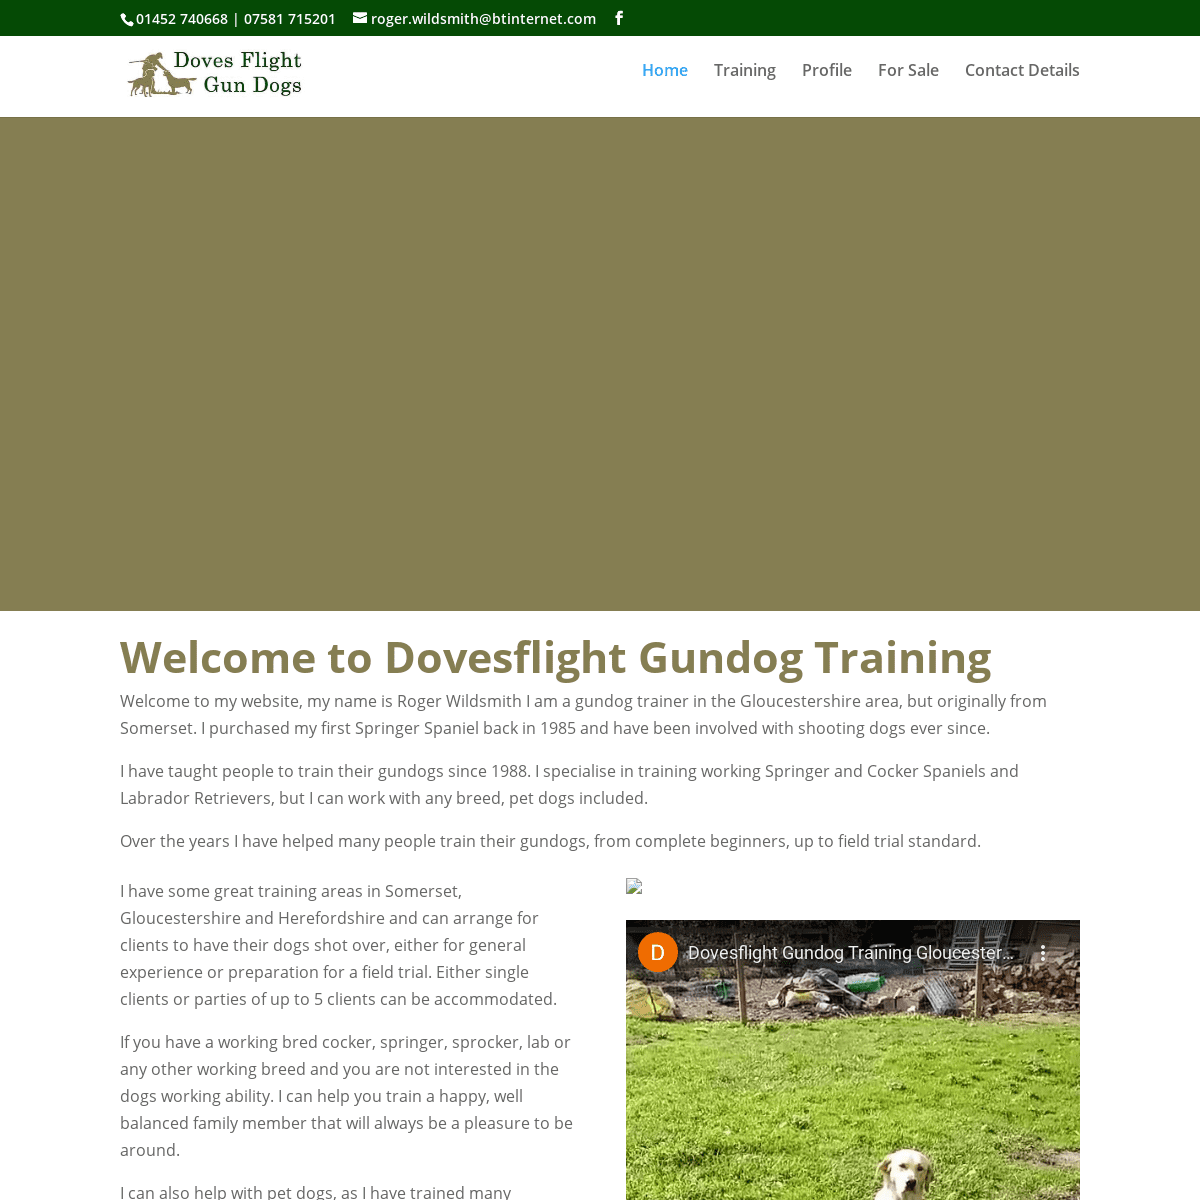 A complete backup of https://dovesflightgundogs.com